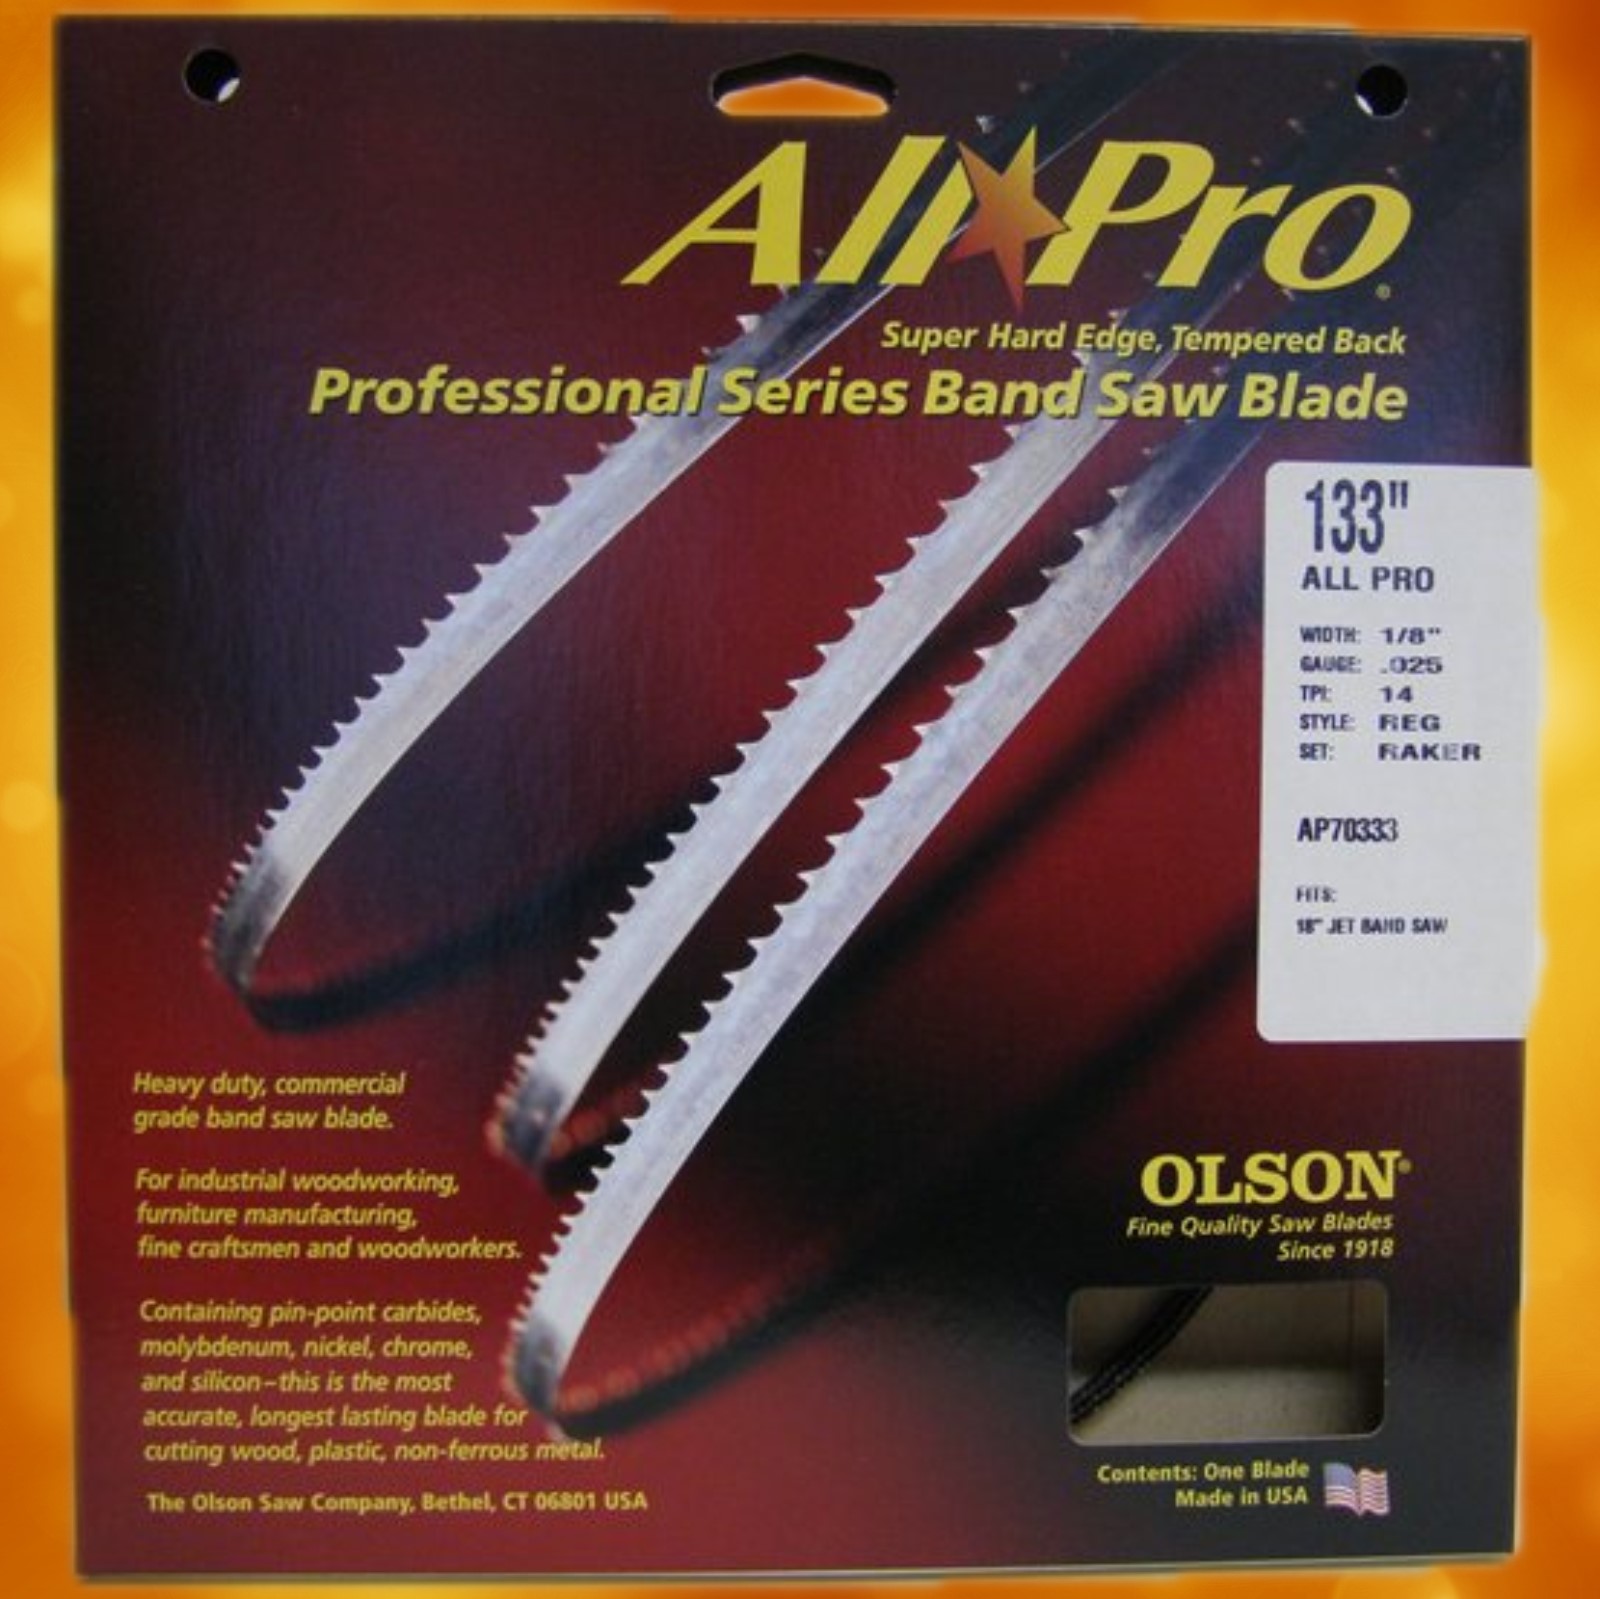 Olson All Pro Band Saw Blades 133" x 1/8" x .025" 14 TPI Style Regular AP70333